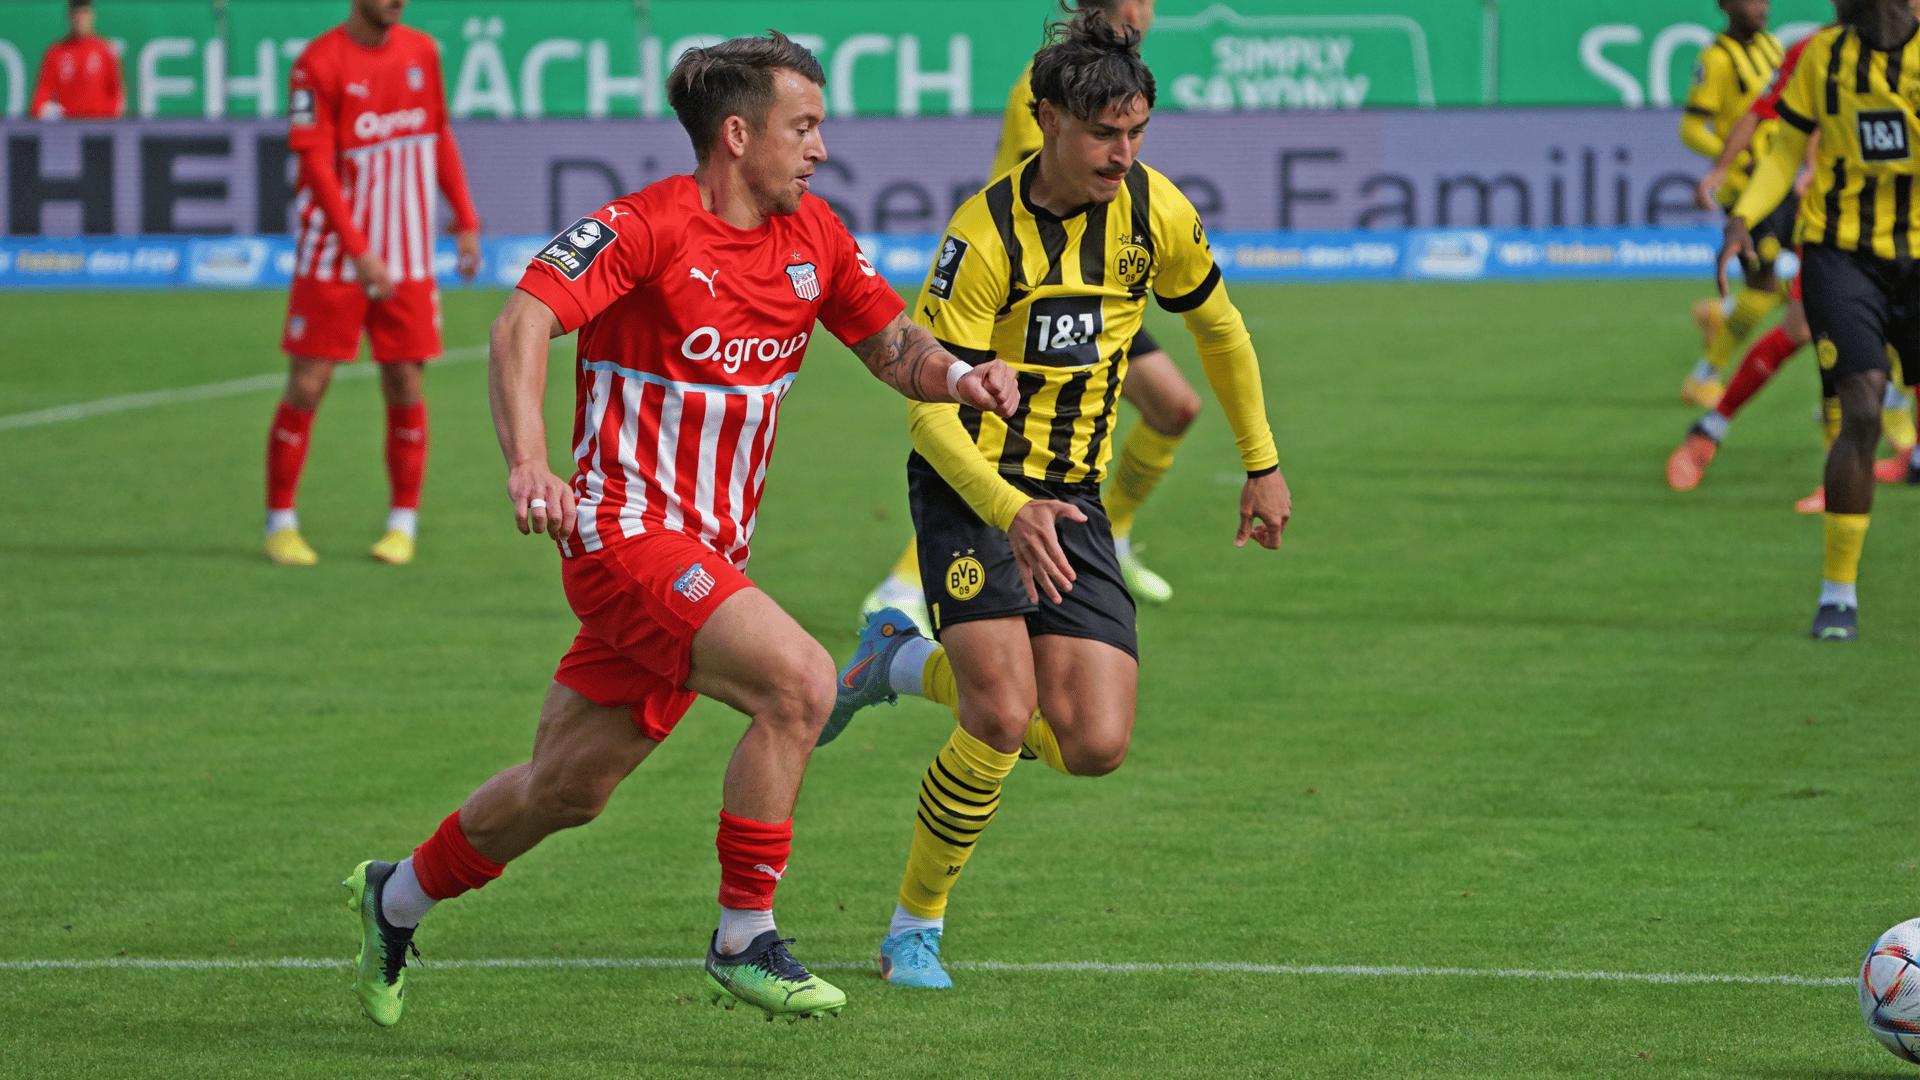 FSV Zwickau – Borussia Dortmund II 1:2 (1:0) [9. Spieltag]